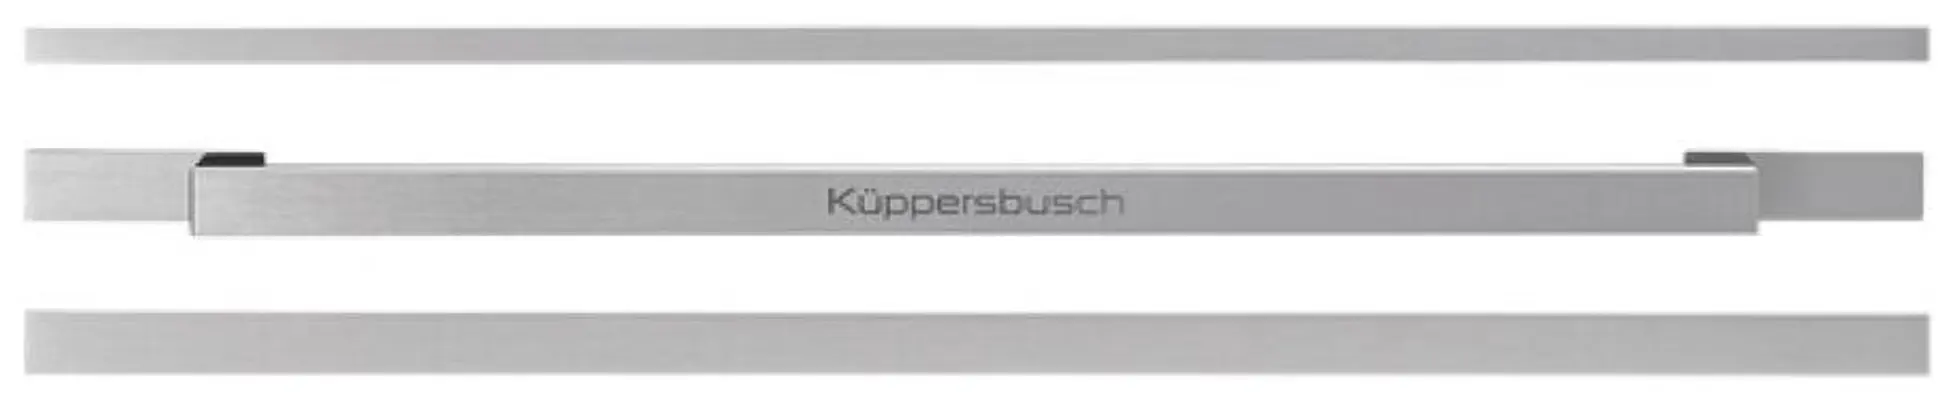 DK1003-Kuppersbusch-Koel-vries-accessoires